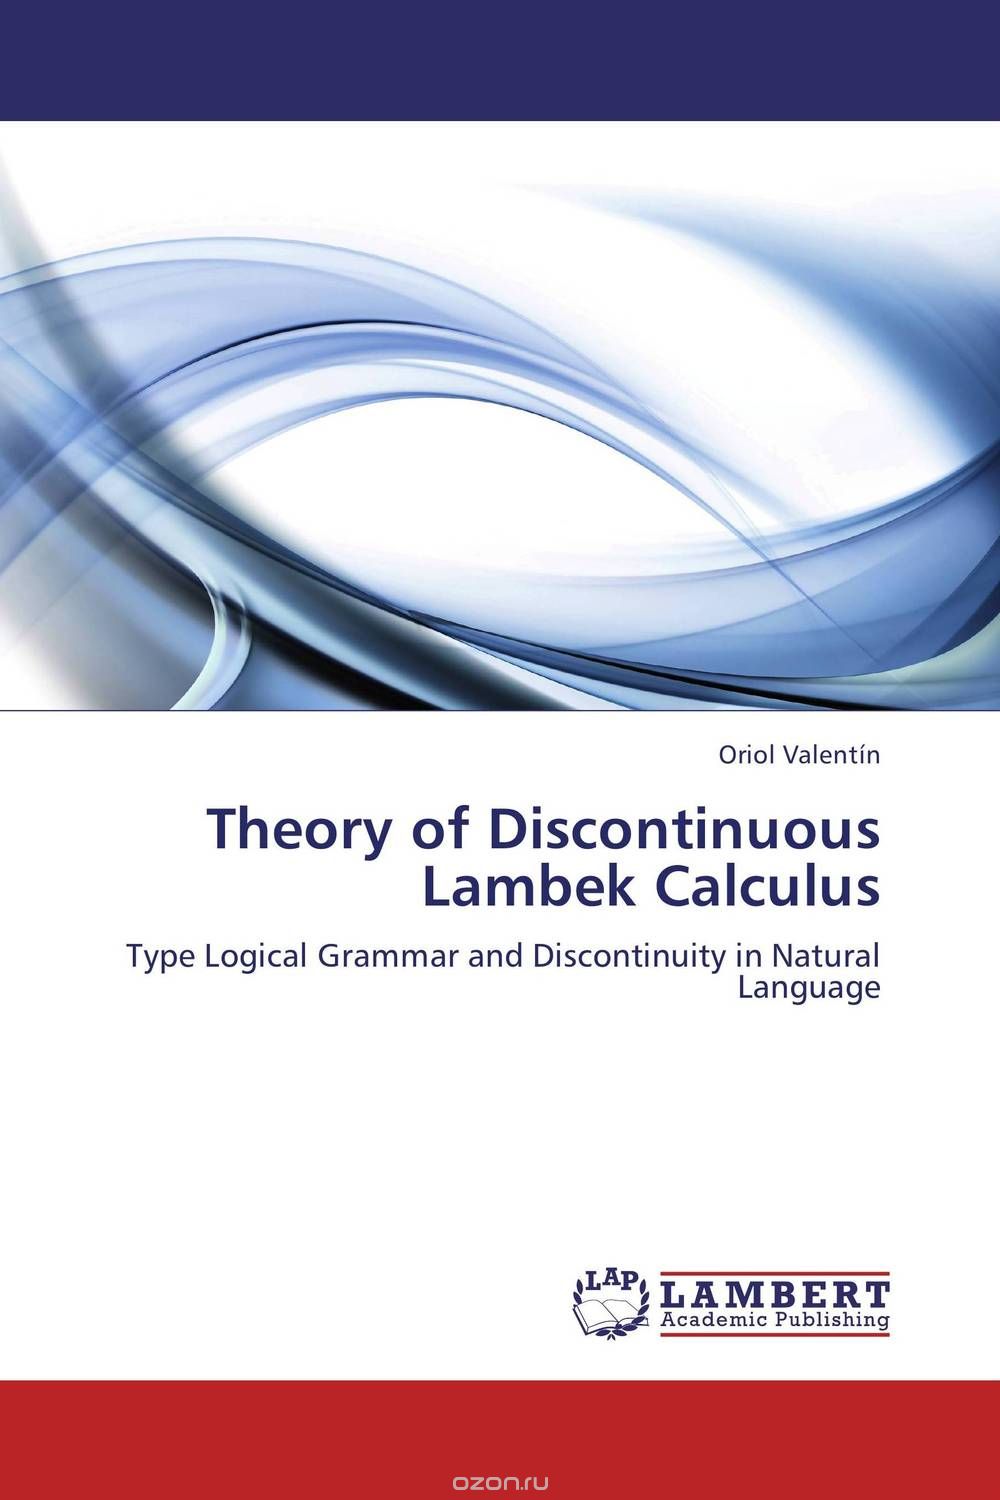 Скачать книгу "Theory of Discontinuous Lambek Calculus"